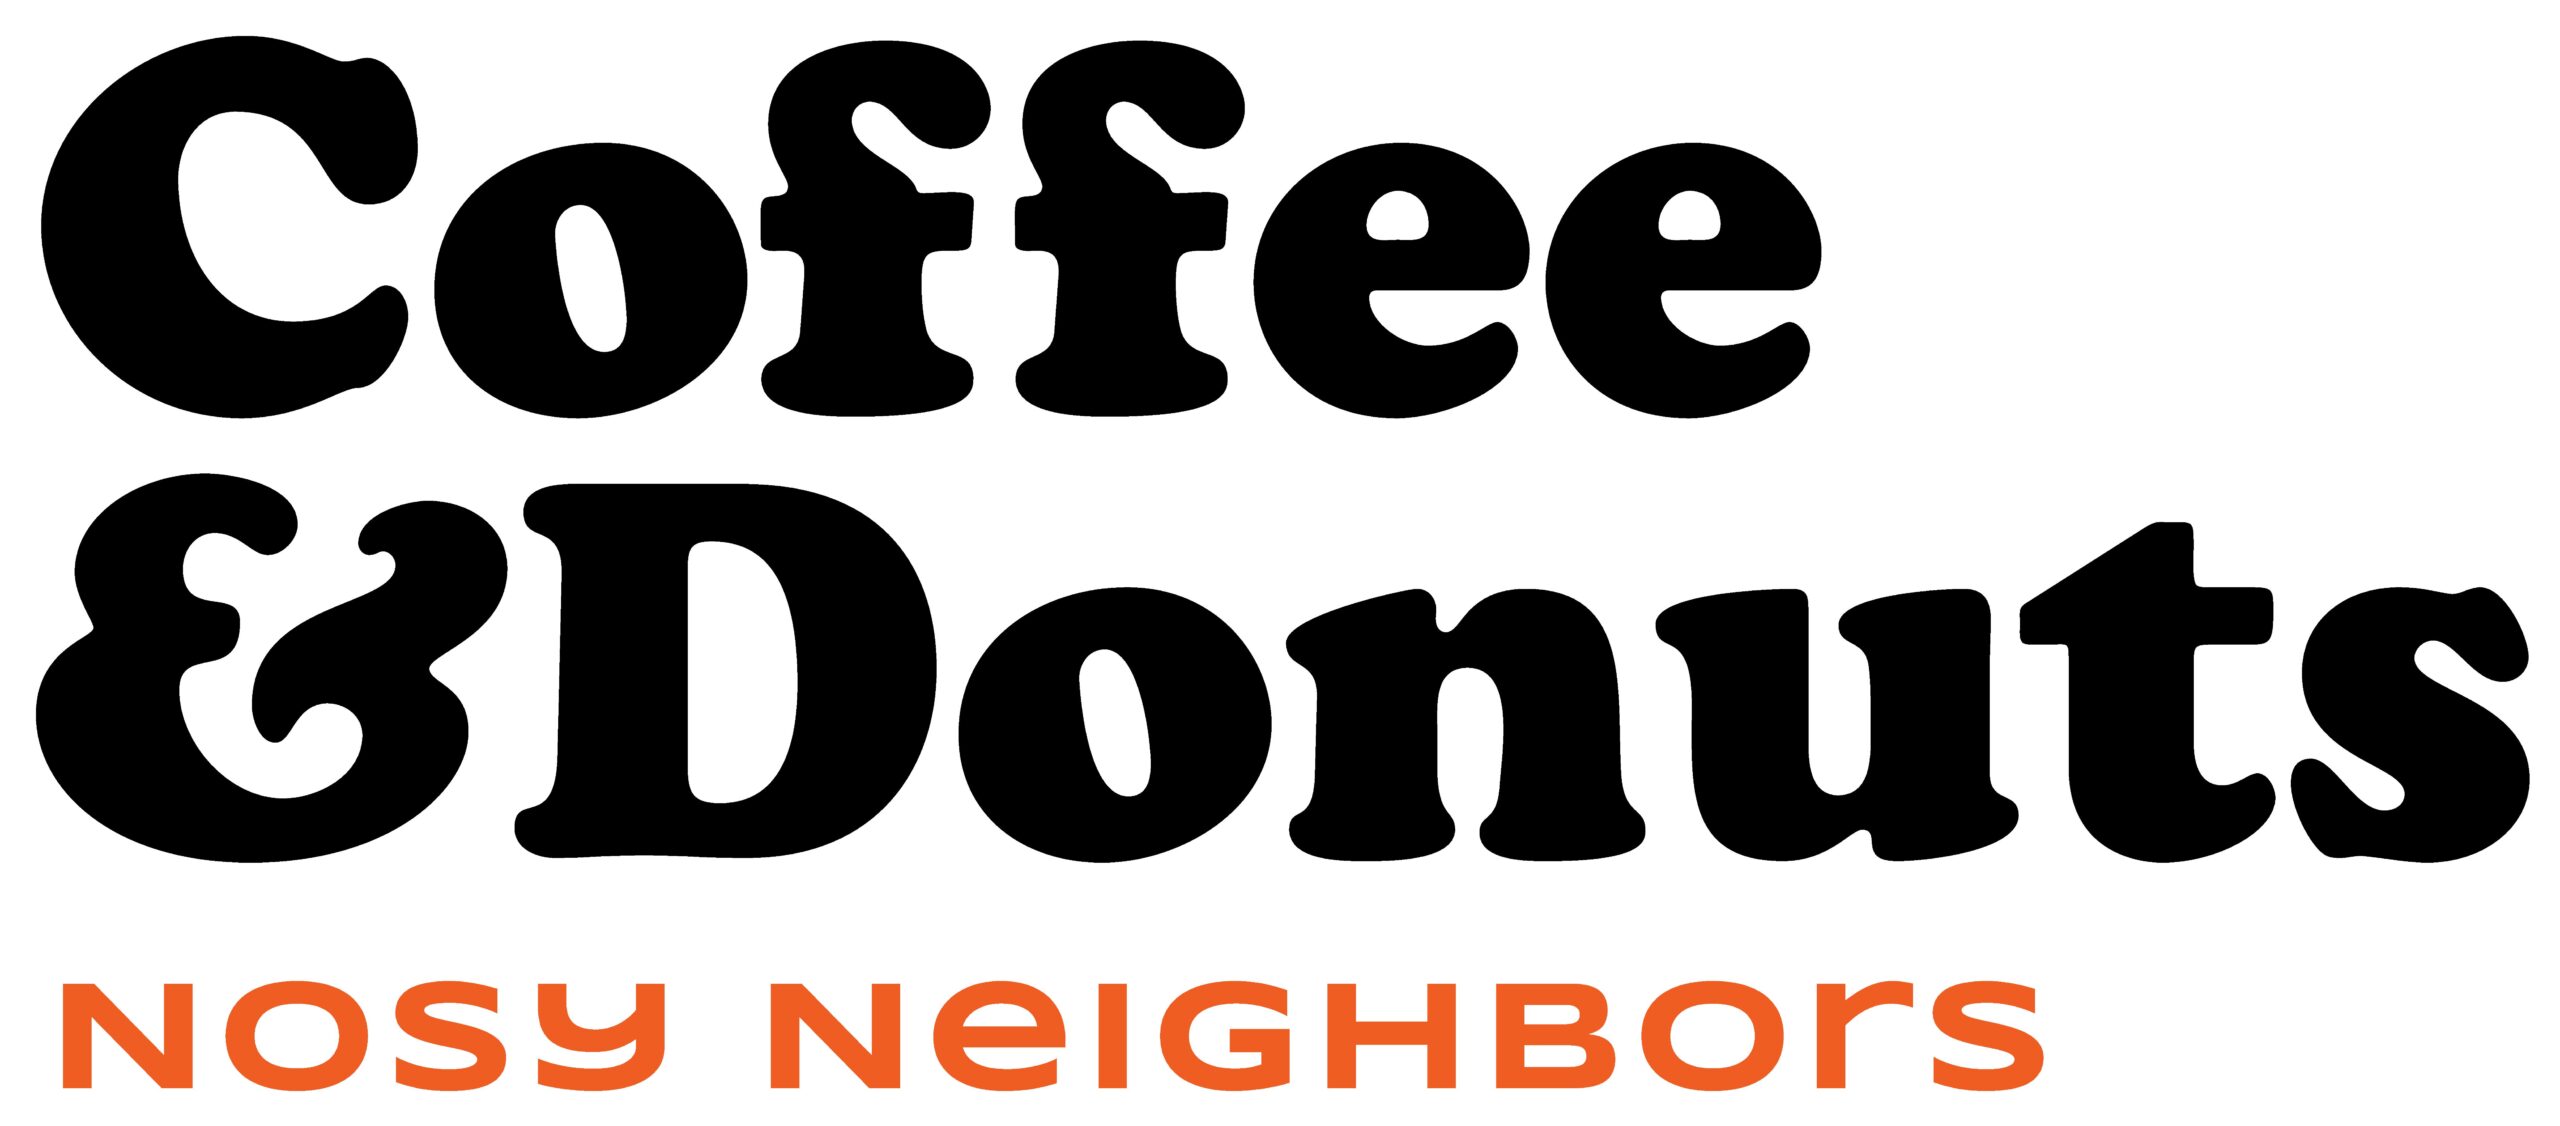 Nosy Neighbors Coffee & Donuts